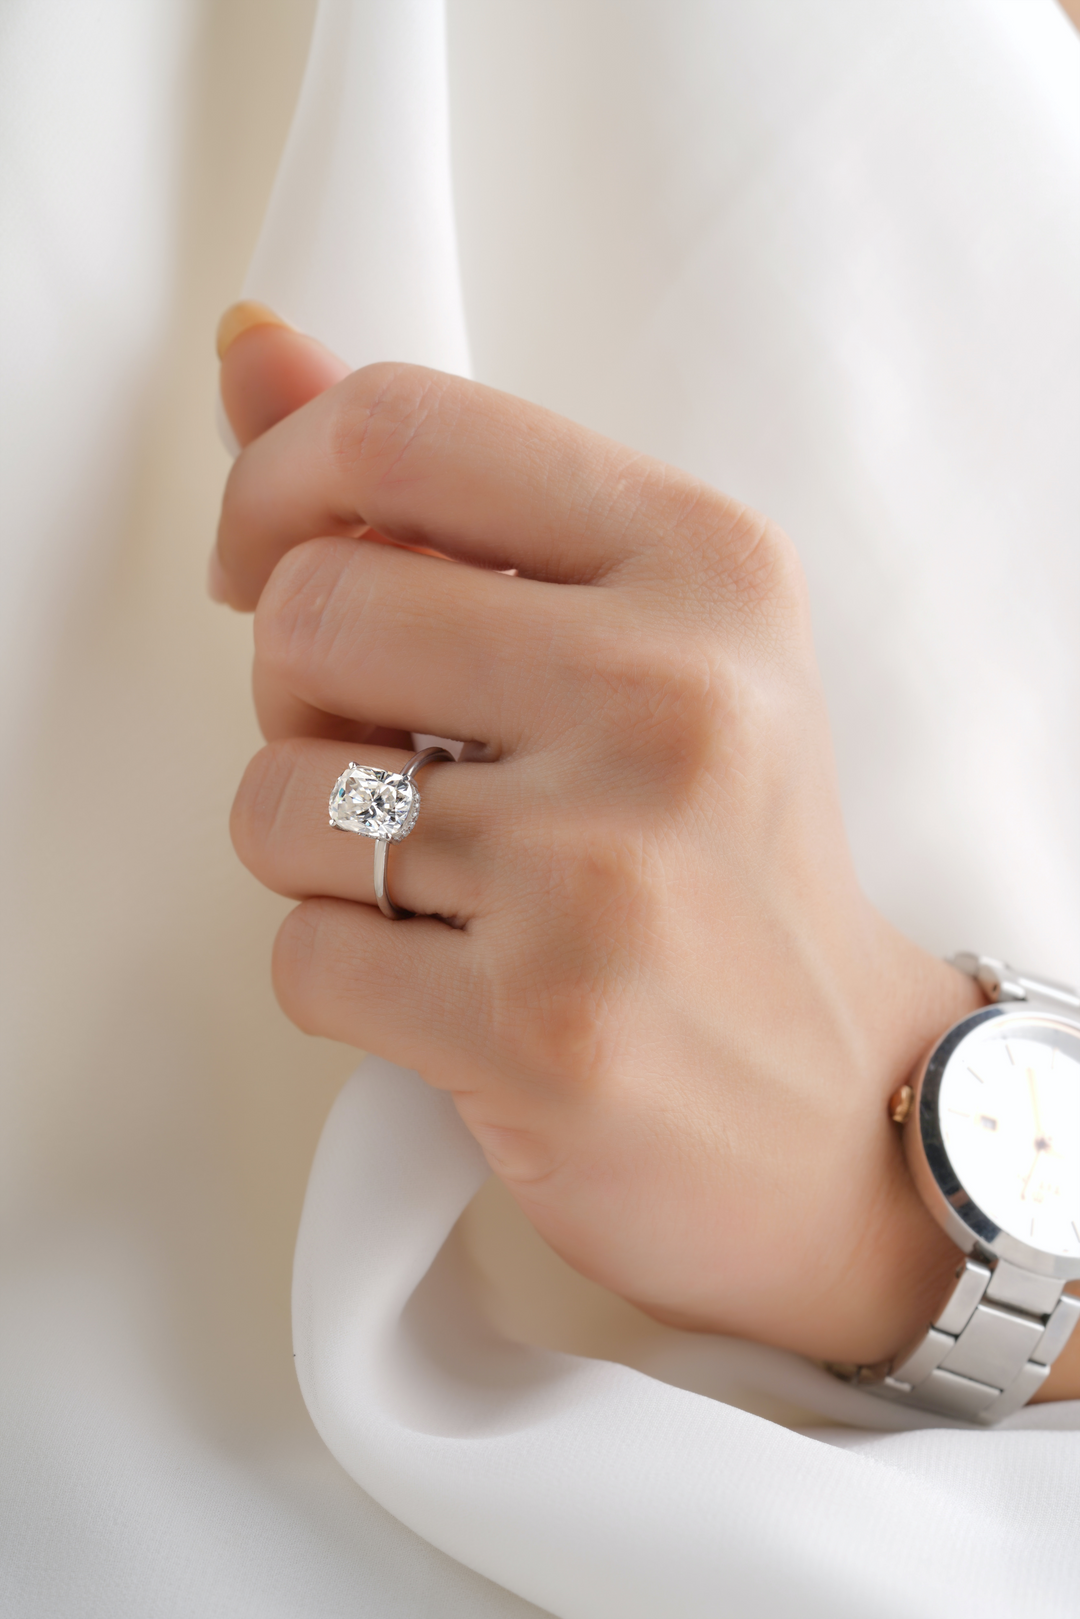 a diamond engagement ring